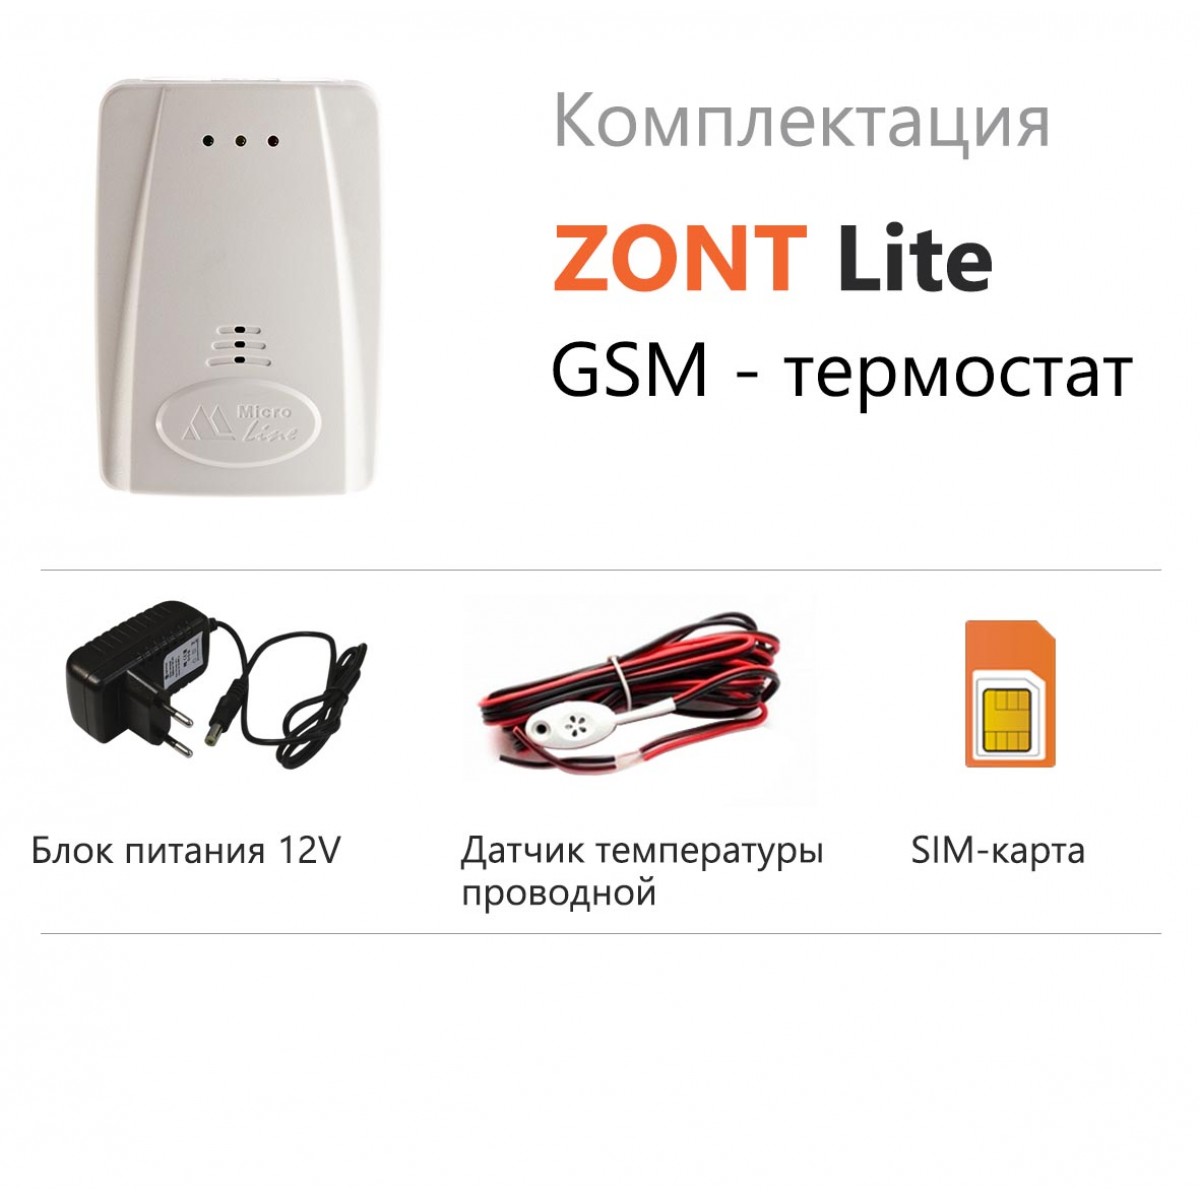 Zont v. GSM термостат Zont Lite 737. Термостаты GSM Zont Lite. Wi-Fi термостат Zont h-2. Термостат Zont h-1v.02.